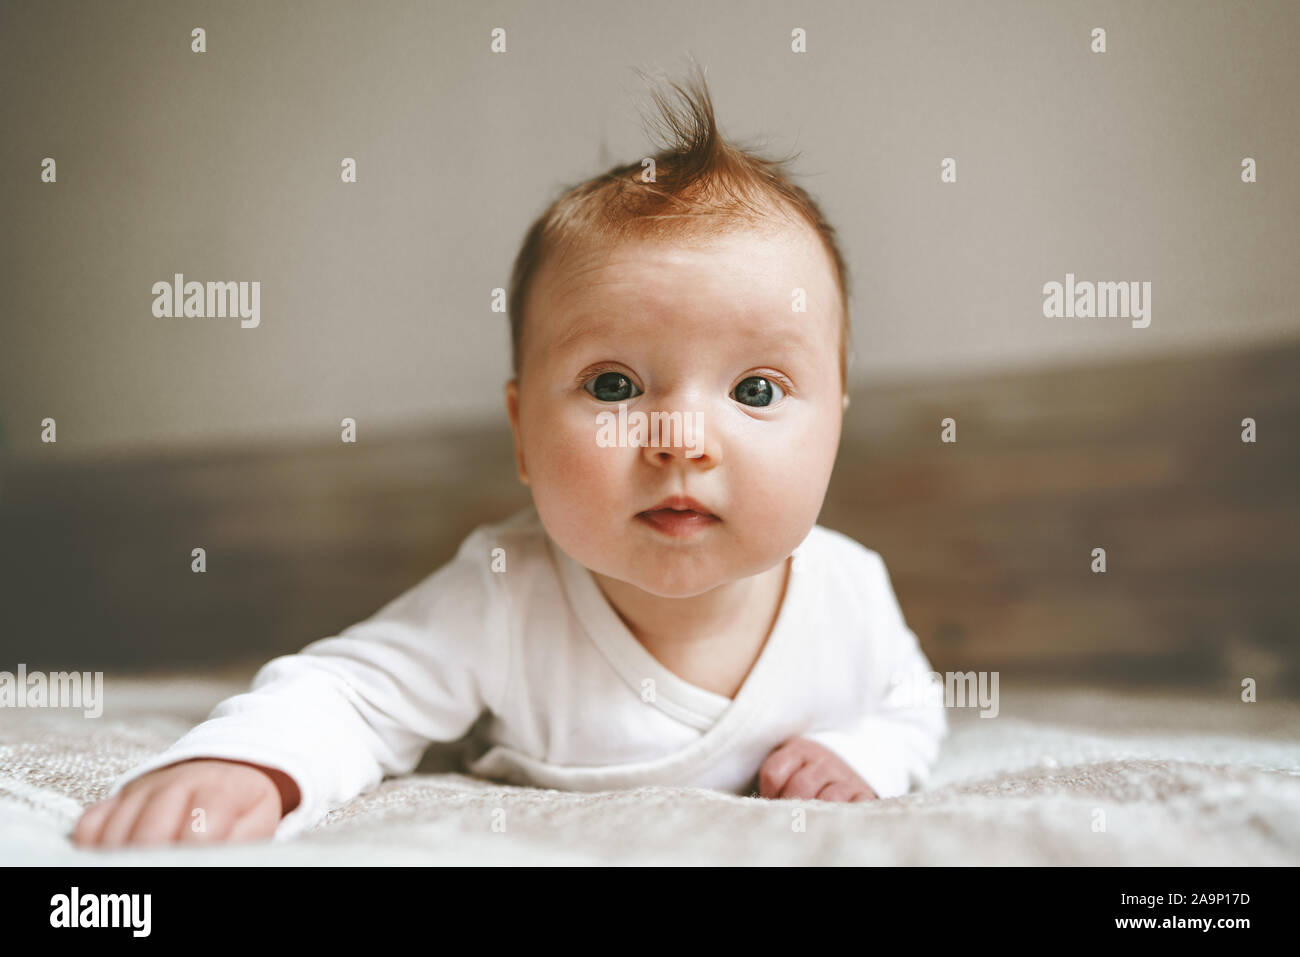 Cute Baby Kleinkind crawling im Schlafzimmer adorable kid Porträt Familie Lebensstil 3 Monate alten Kind close-up Stockfoto